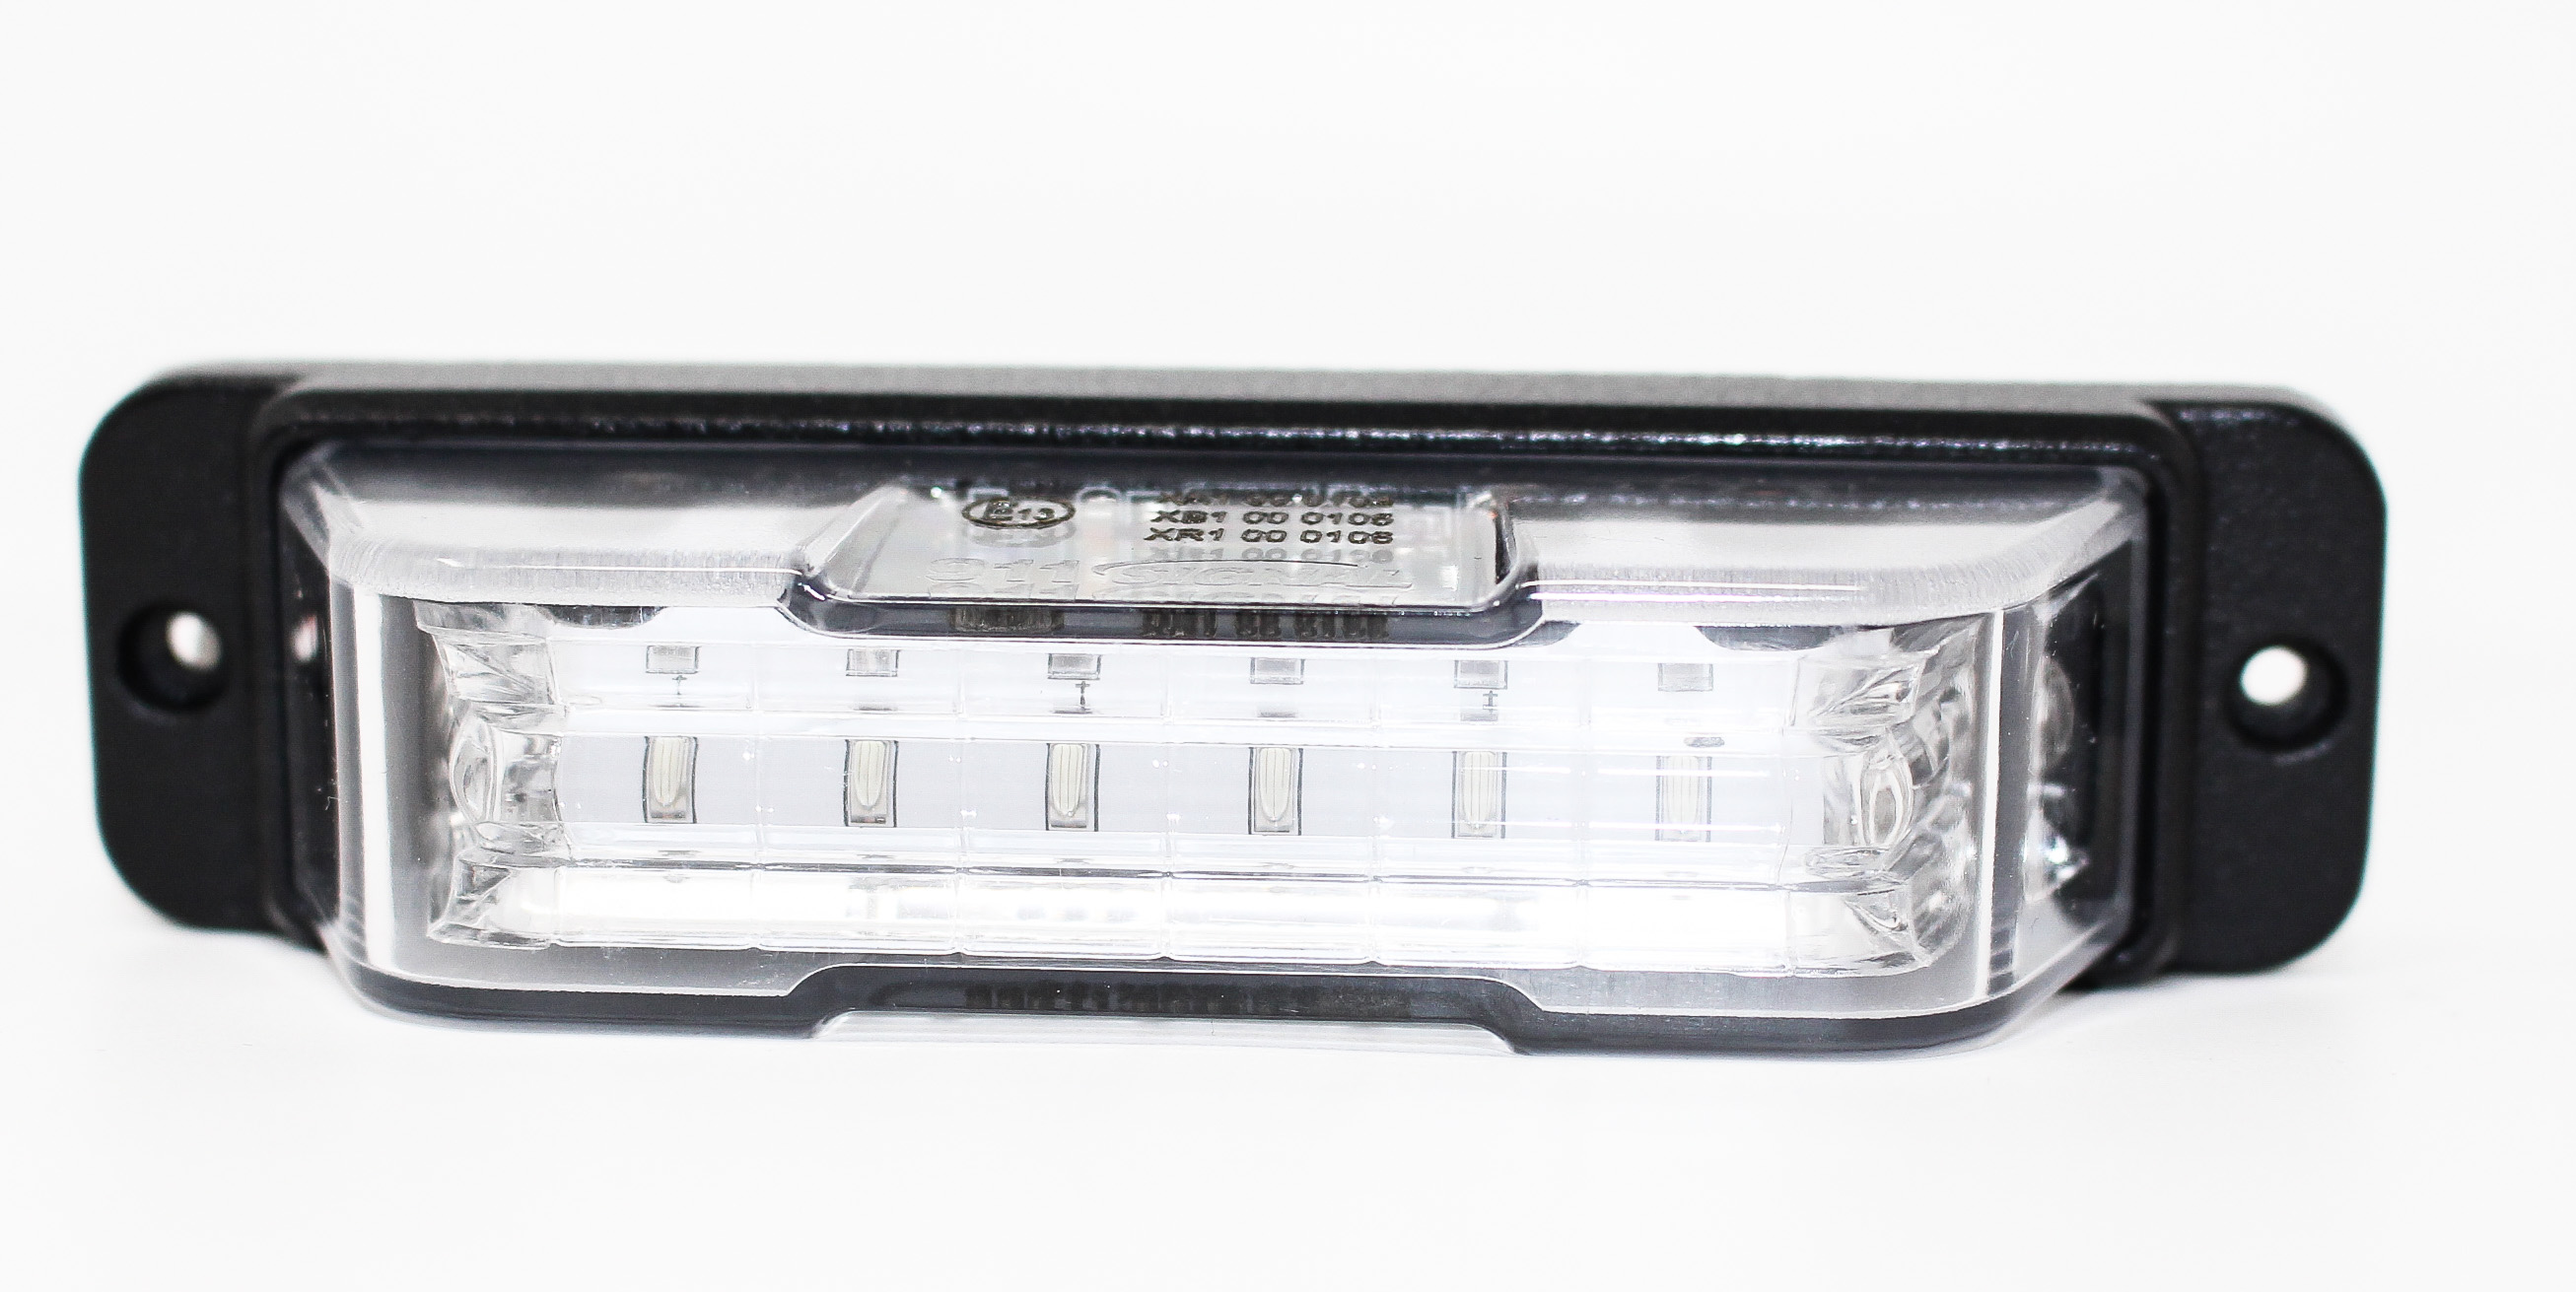 Frontblitzer L200 LED mit Kreuzungsblitz (1 Paar)